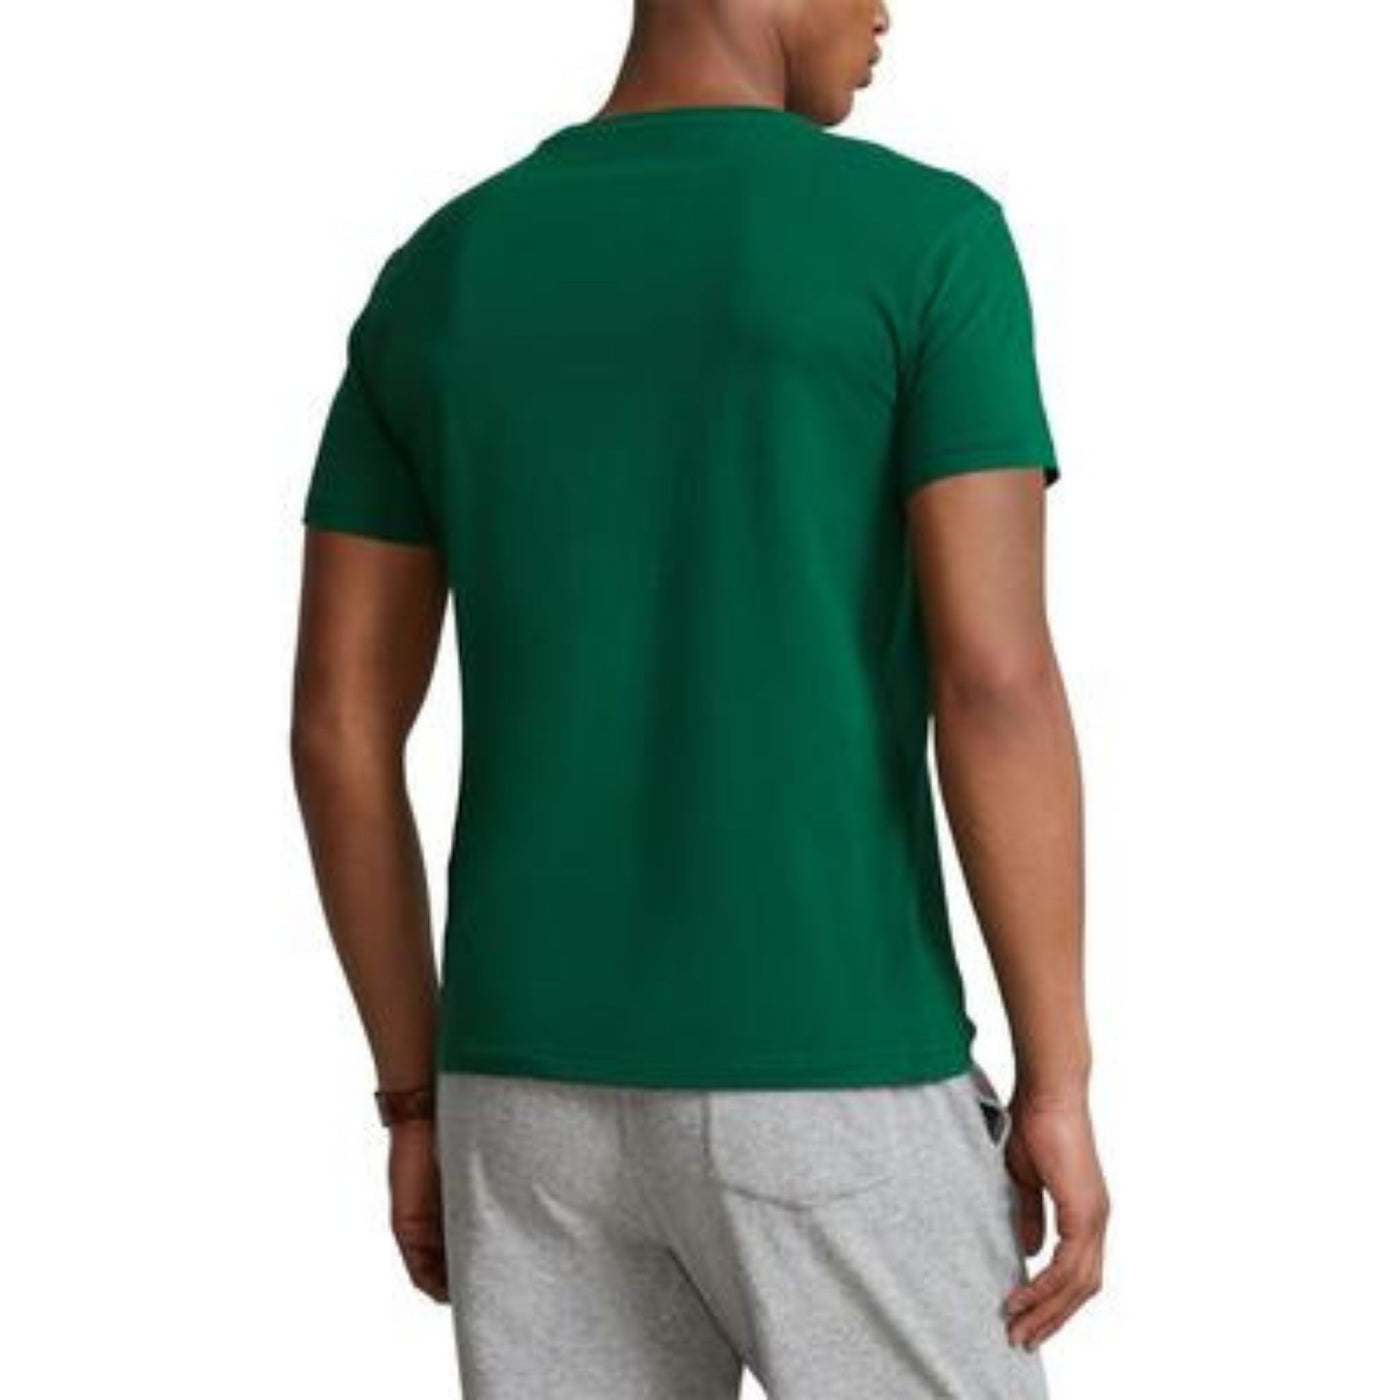 T-shirt uomo verde Polo Ralph Lauren su modello vista retro